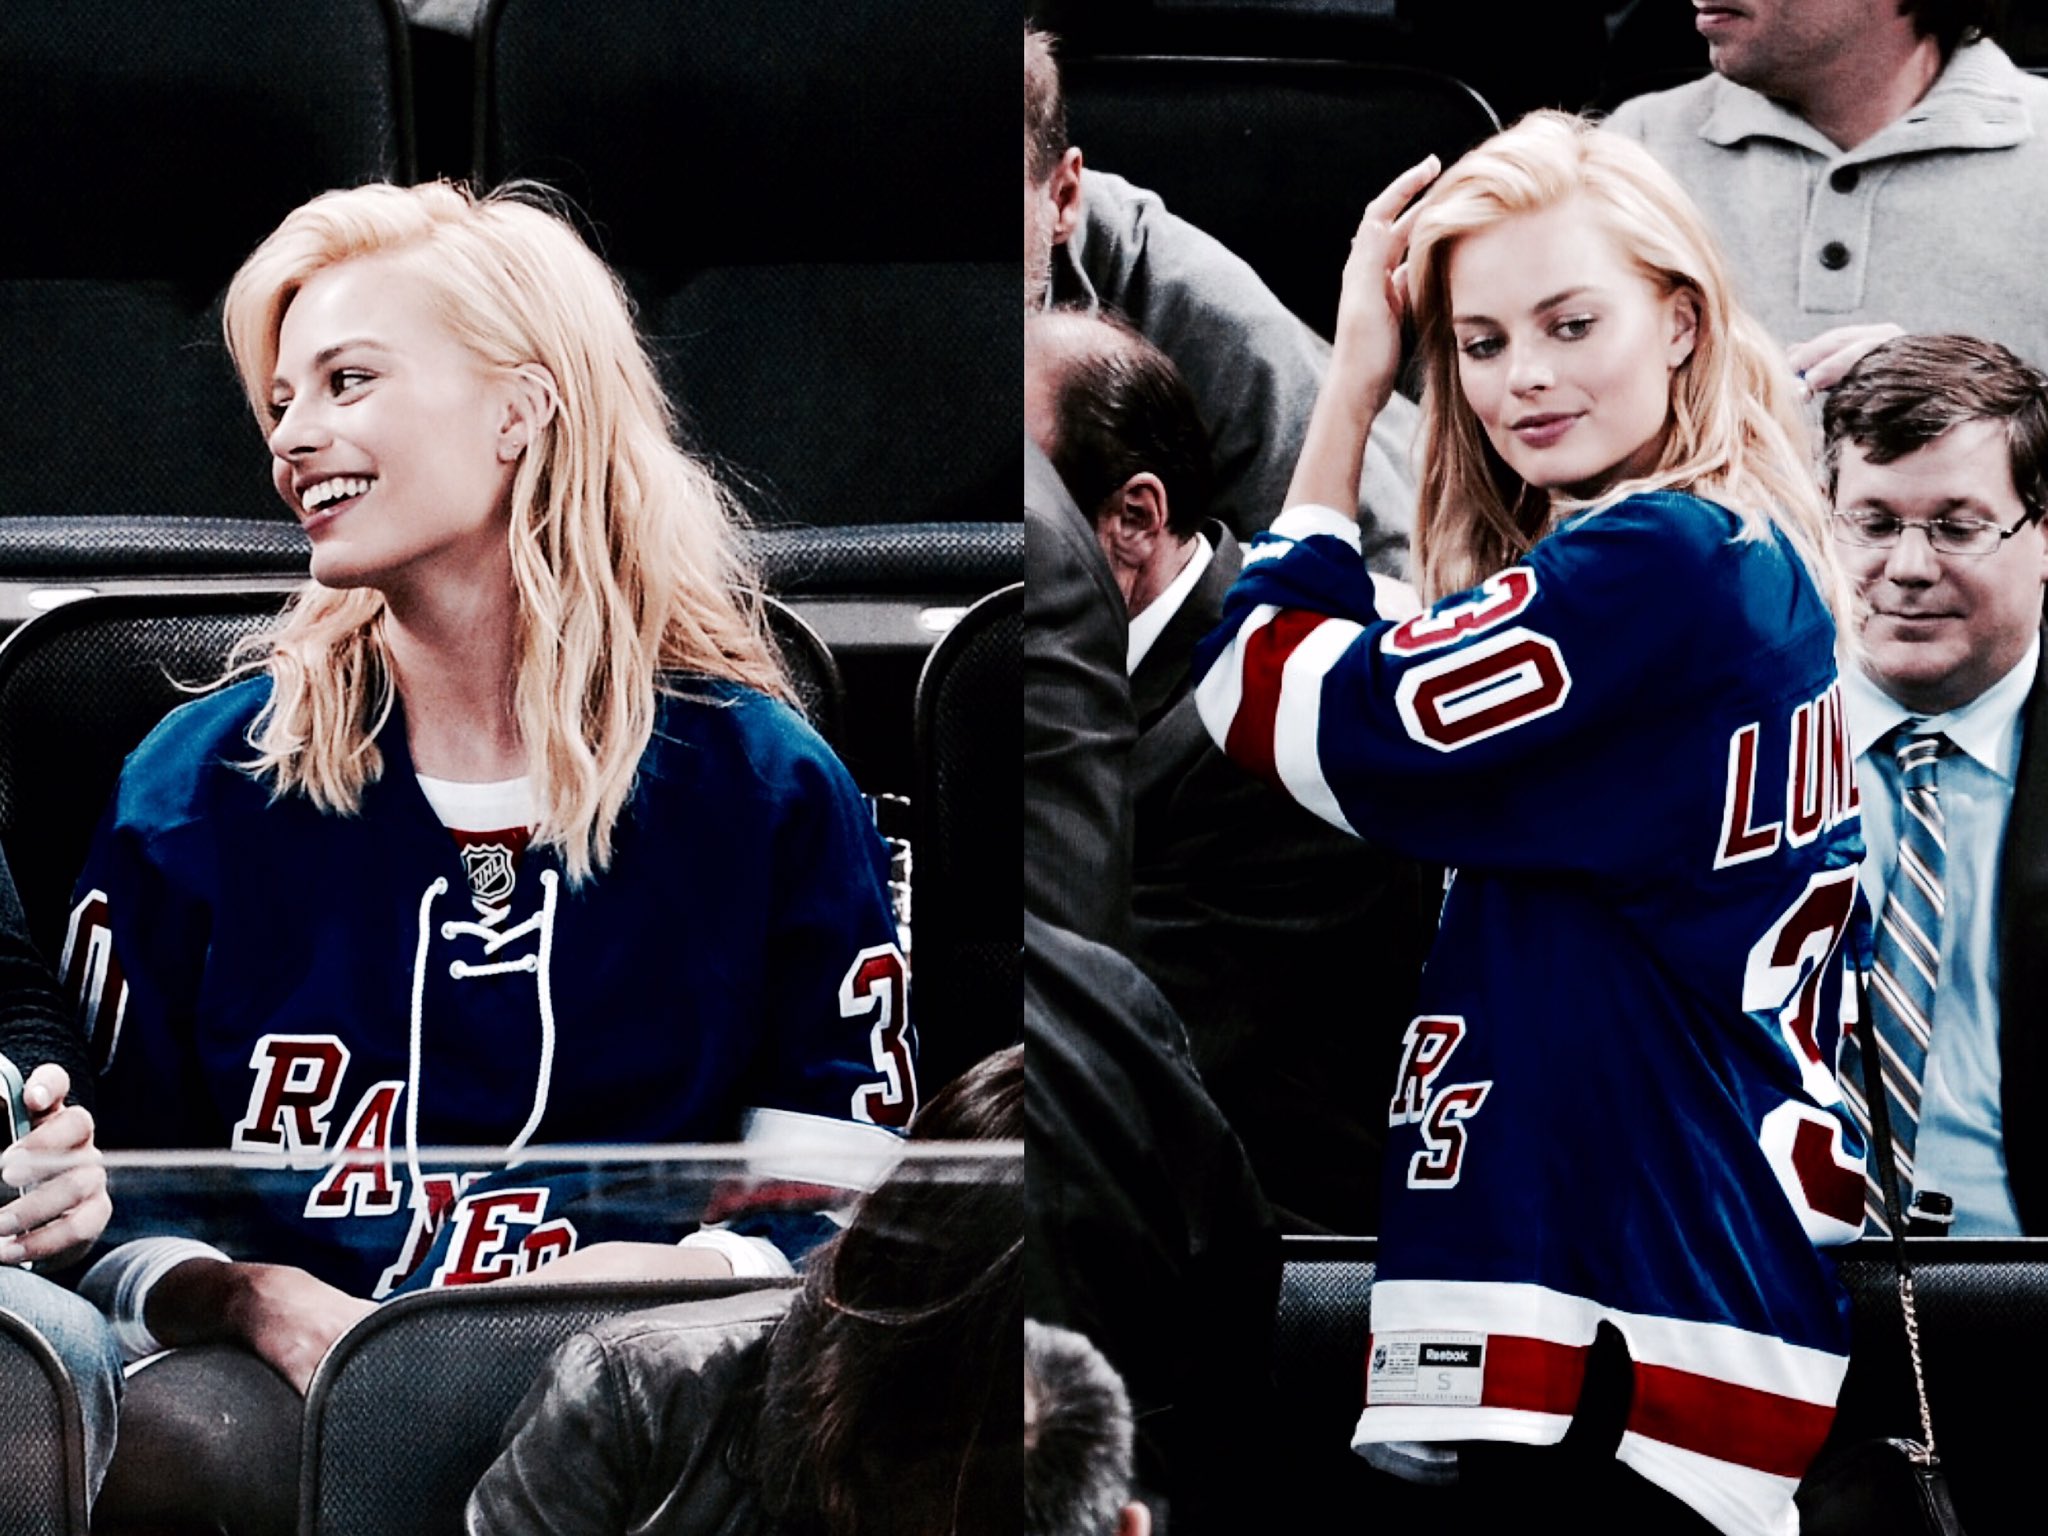 Margot Robbie's emotional journey watching Hockey. : r/pics